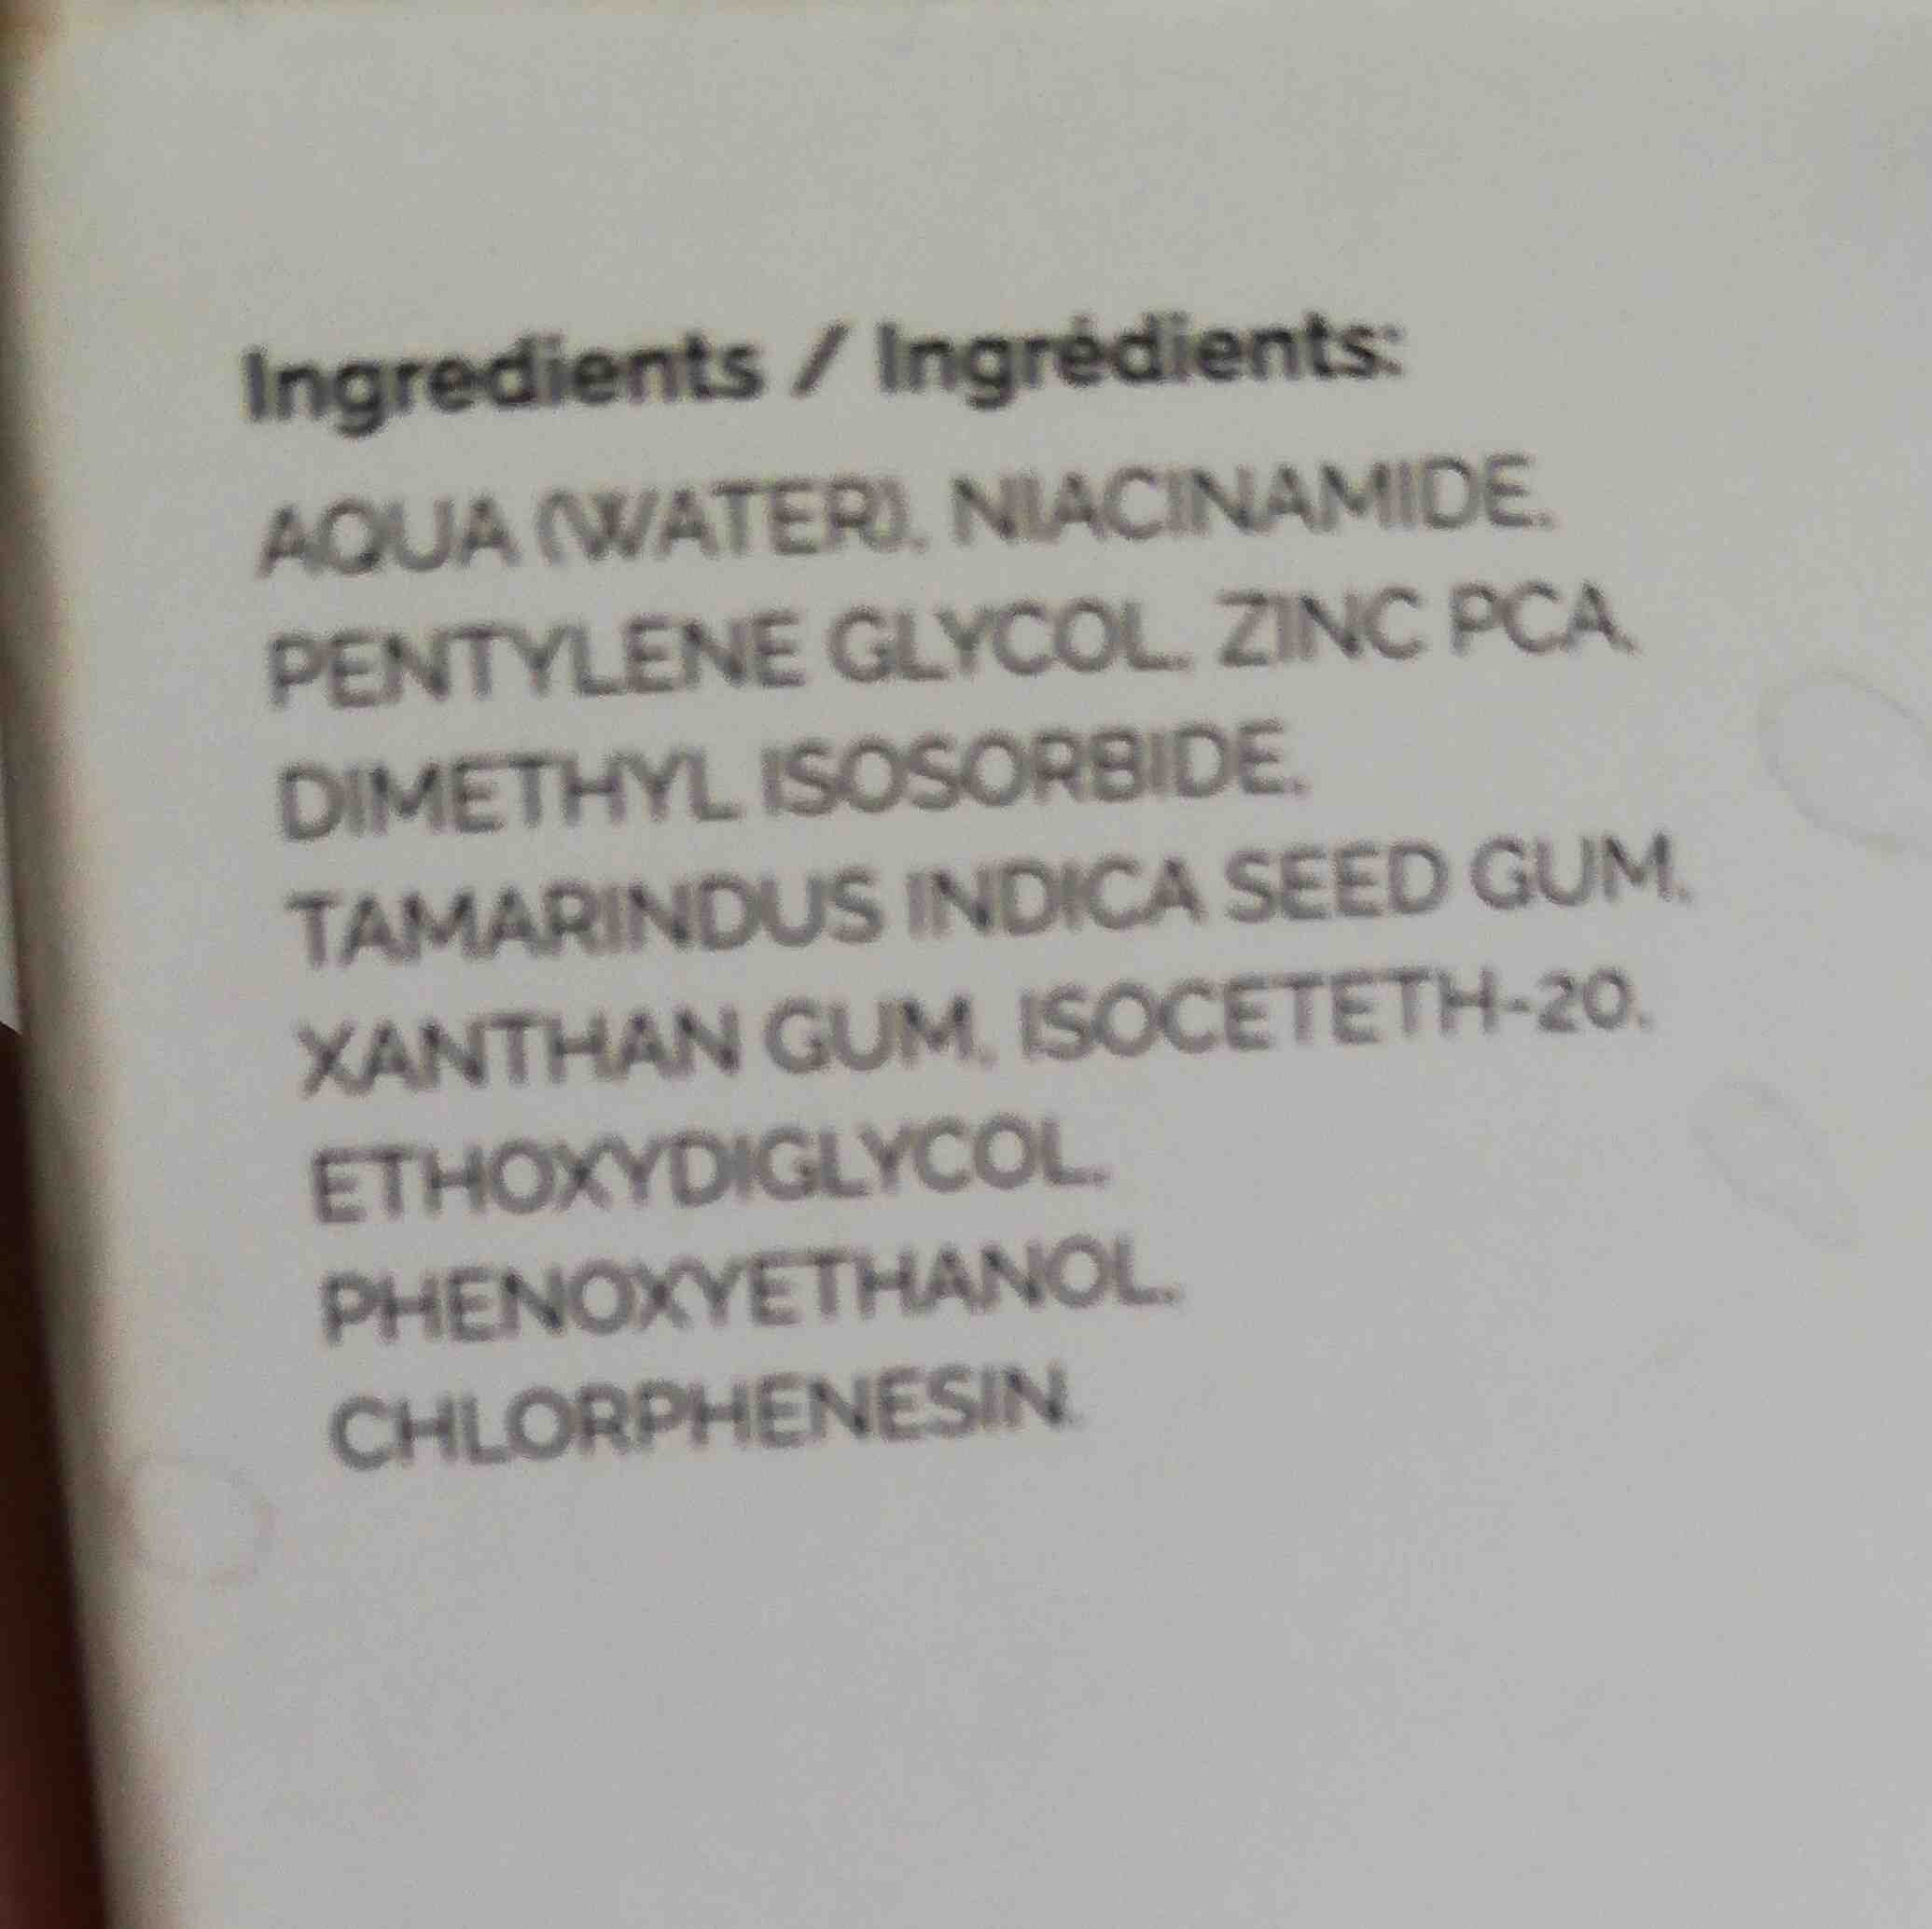 The ordinary niacidamina - Ingredients